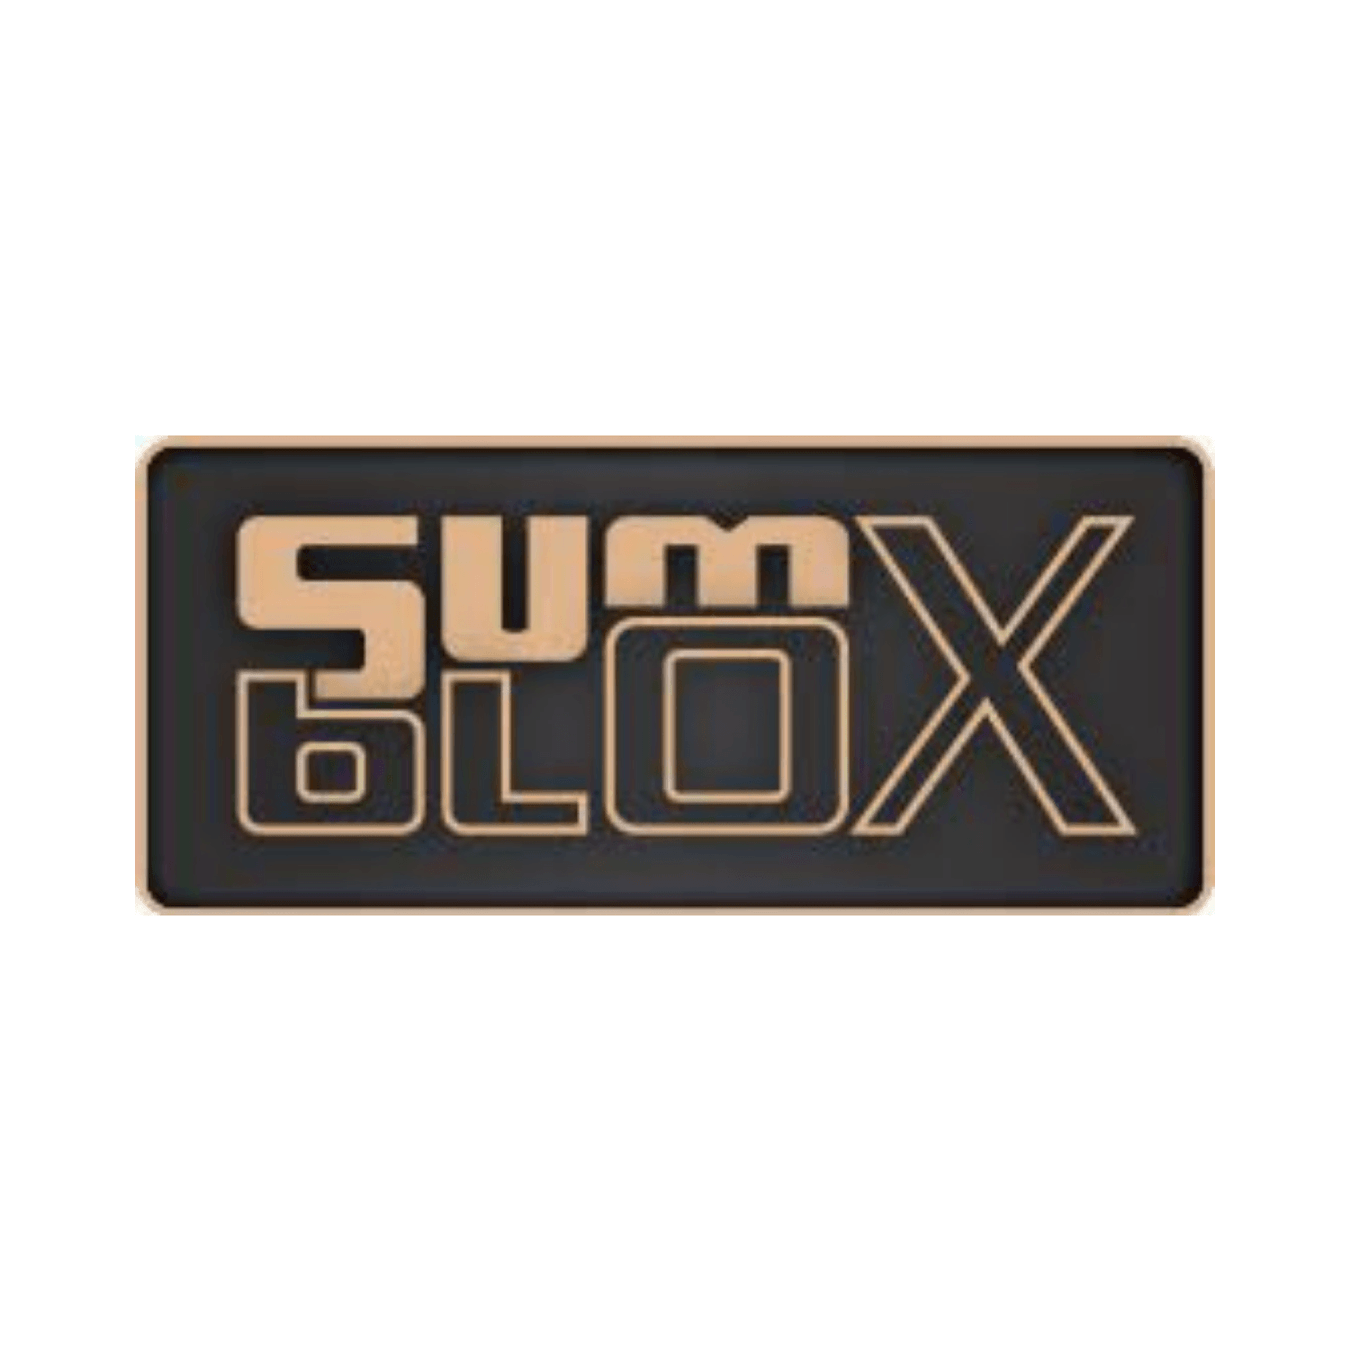 Featured - Sumblox Building Blocks USA - My Playroom 